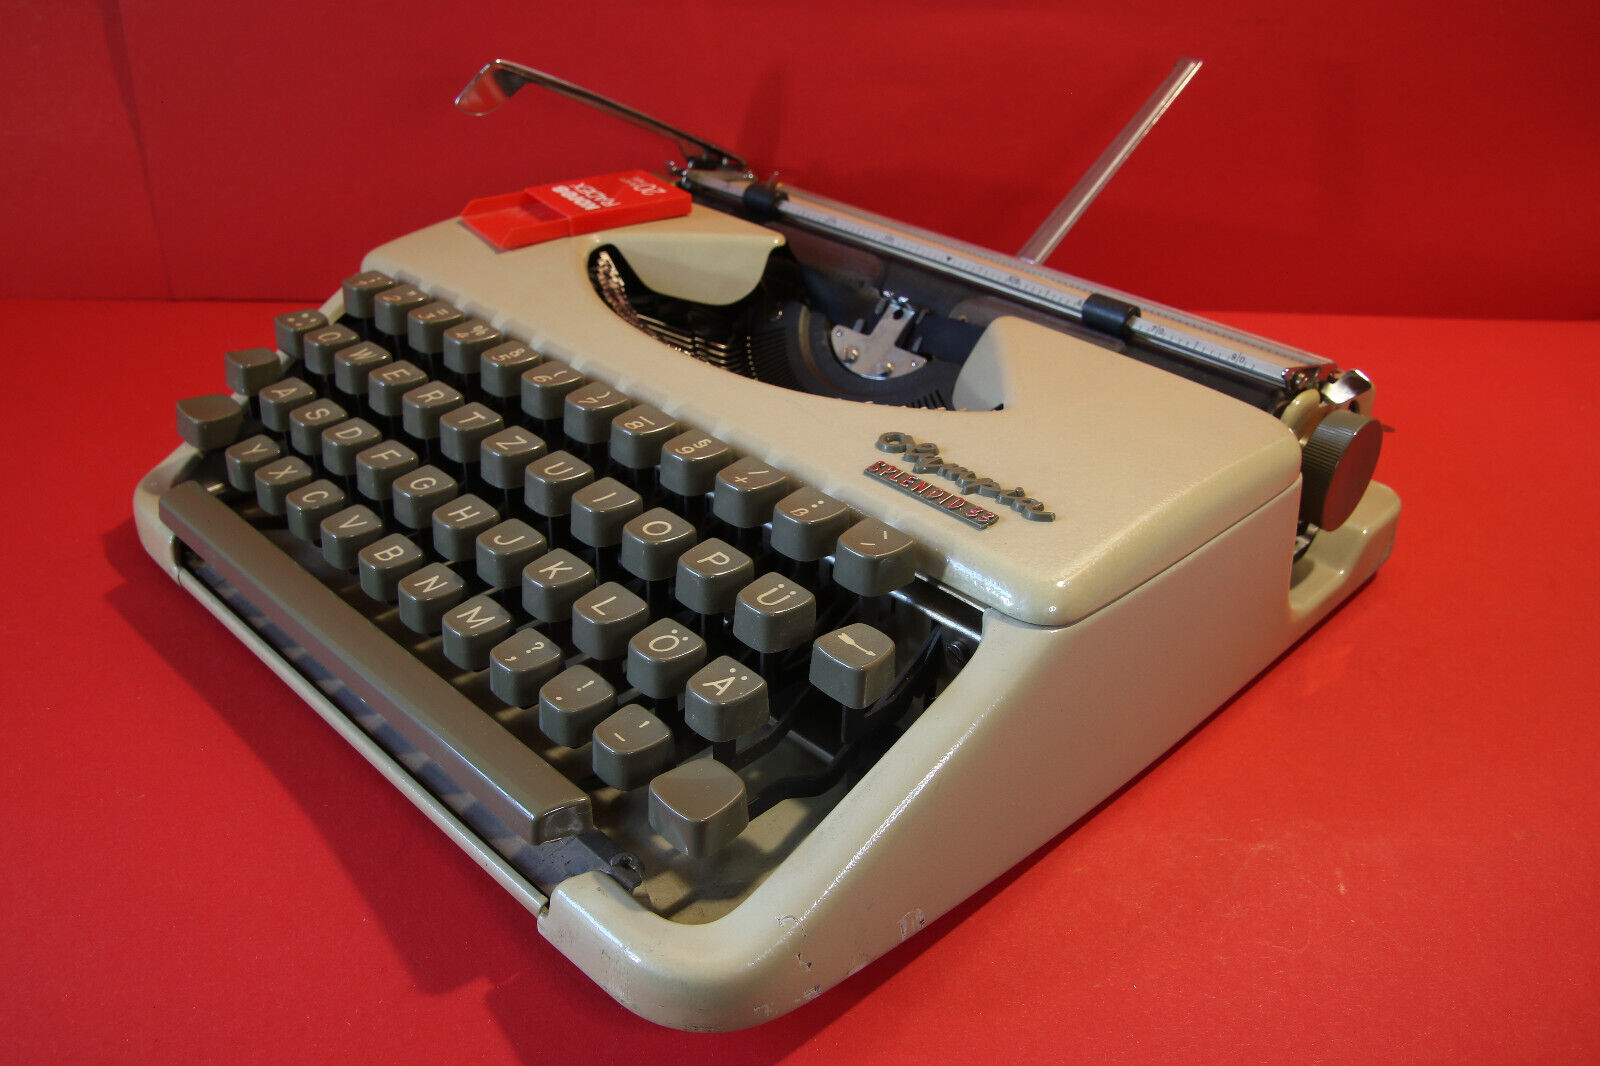 Vintage Olympia Splendid 33 light grey typewriter in very good working condition